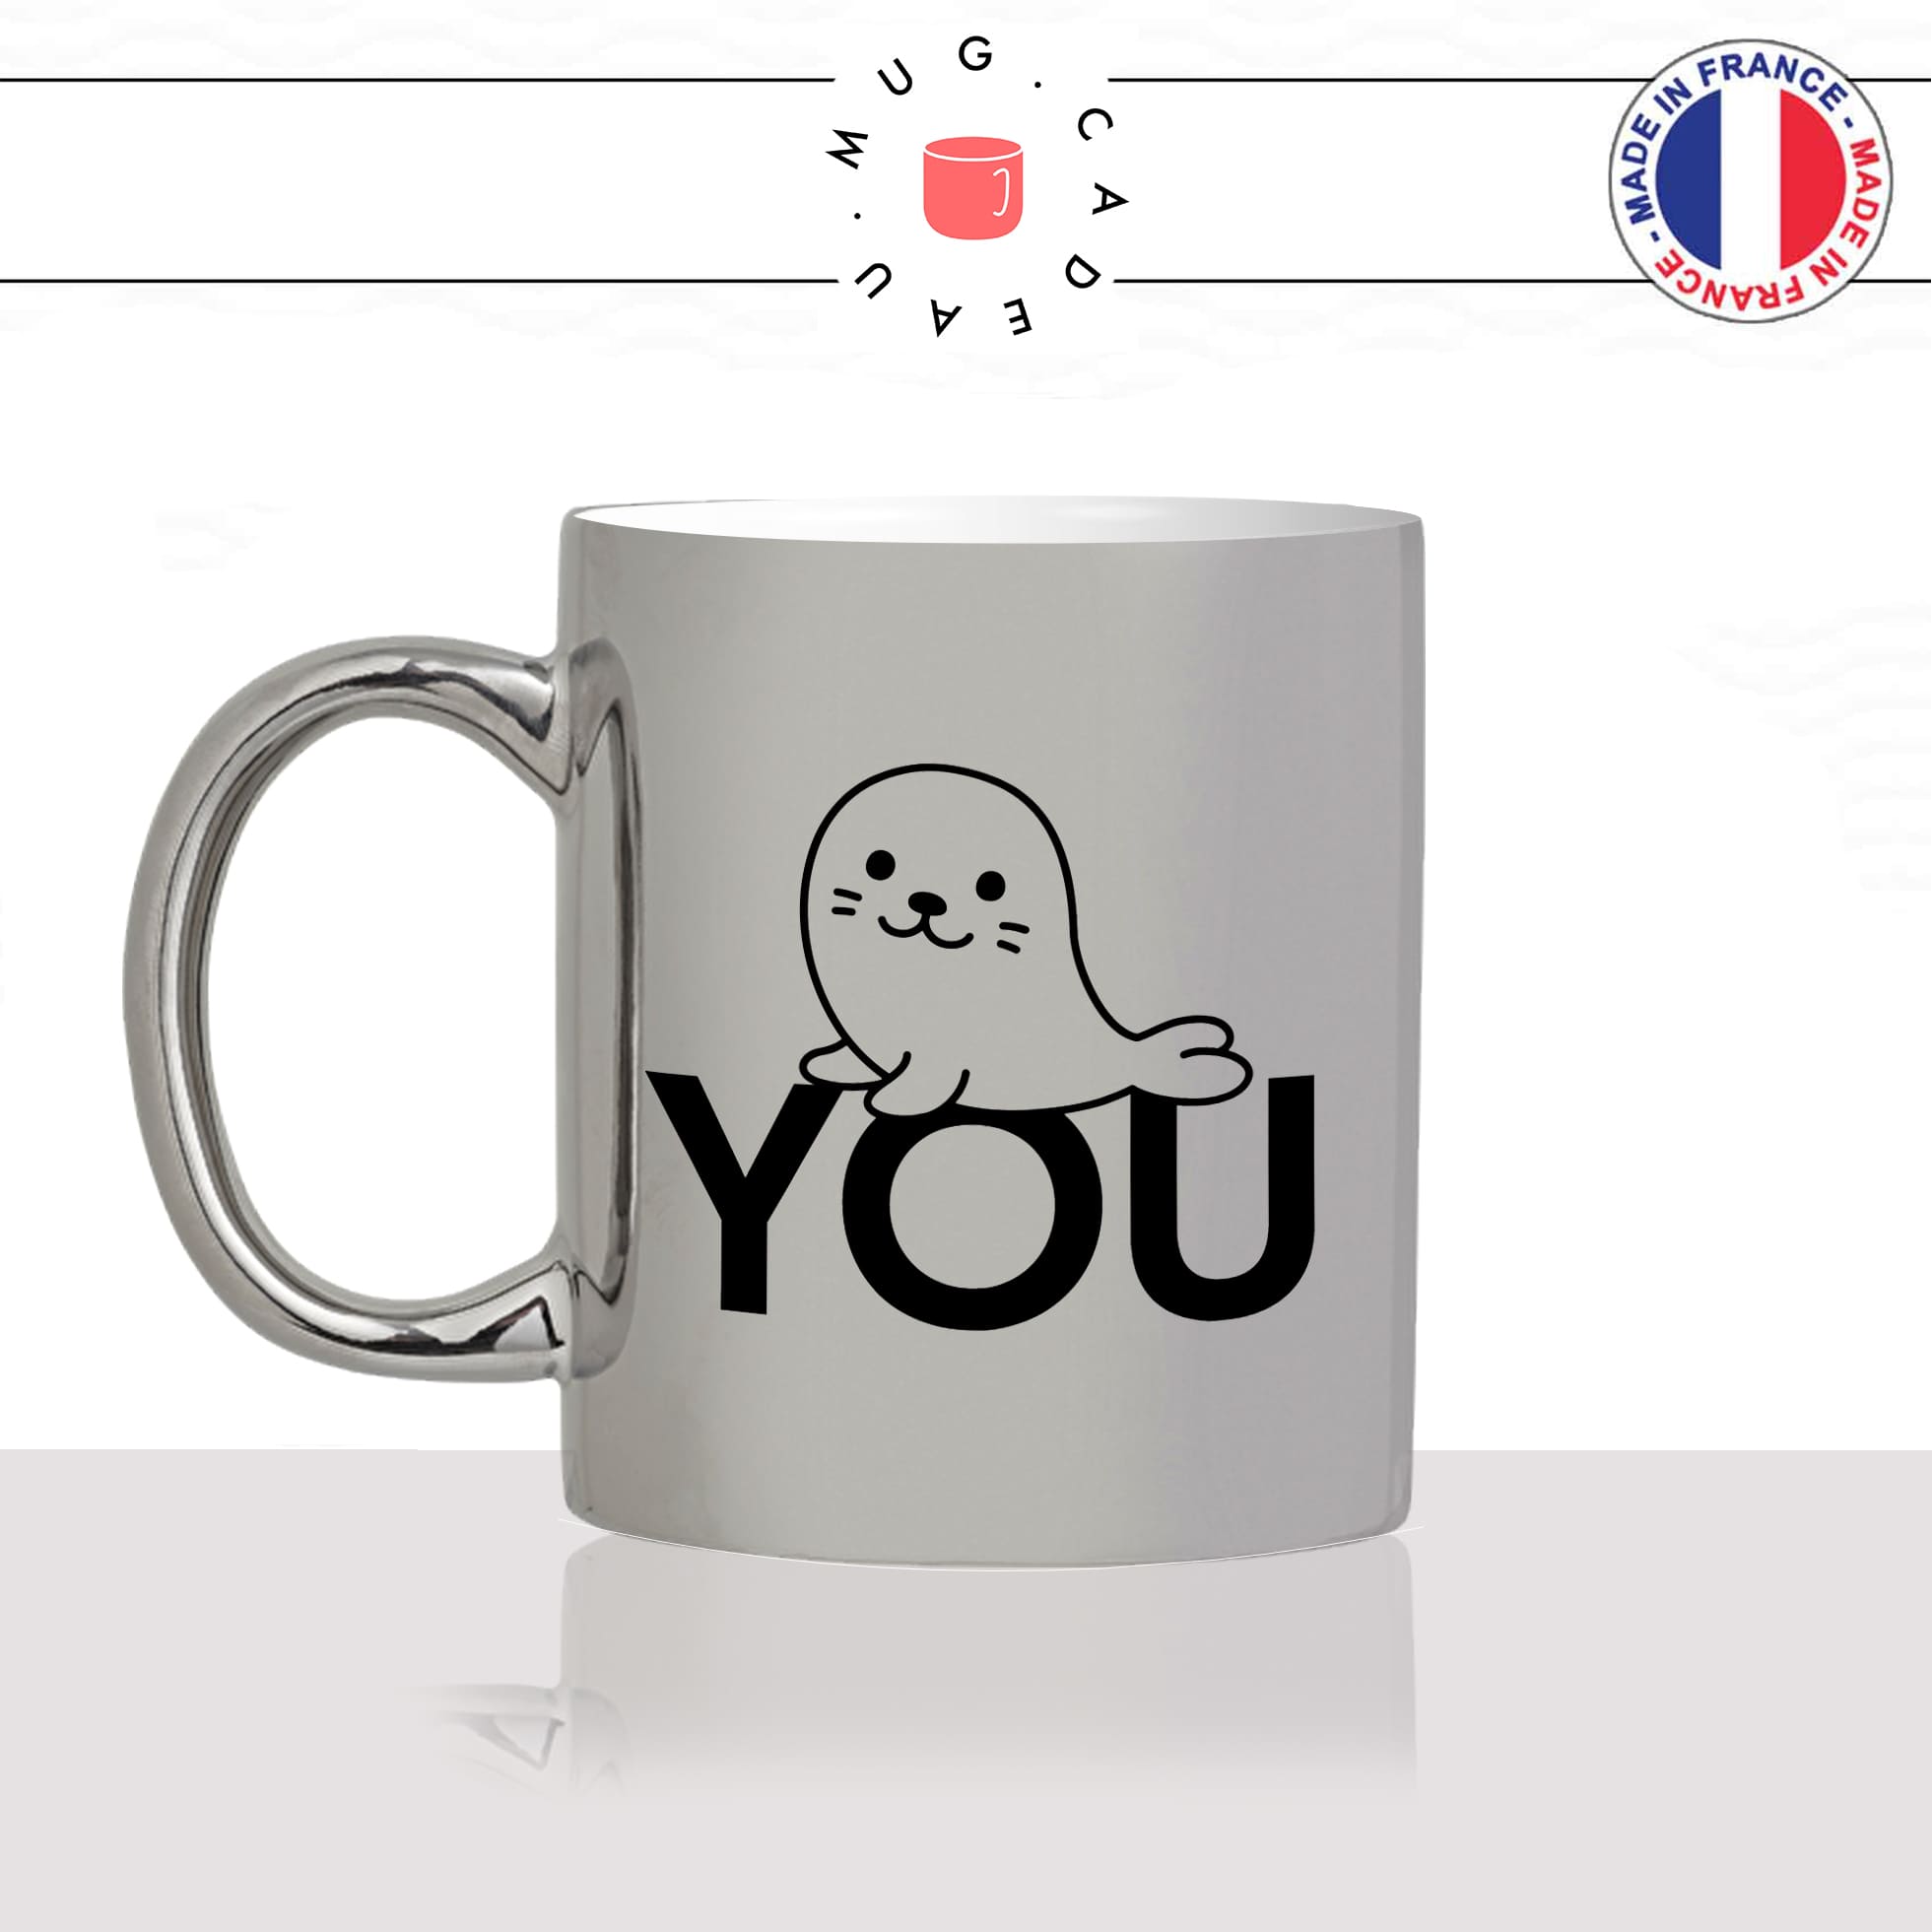 mug-tasse-argenté-argent-gris-silver-phoque-you-dessin-animal-fuck-u-insulte-mignon-humour-fun-idée-cadeau-originale-cool